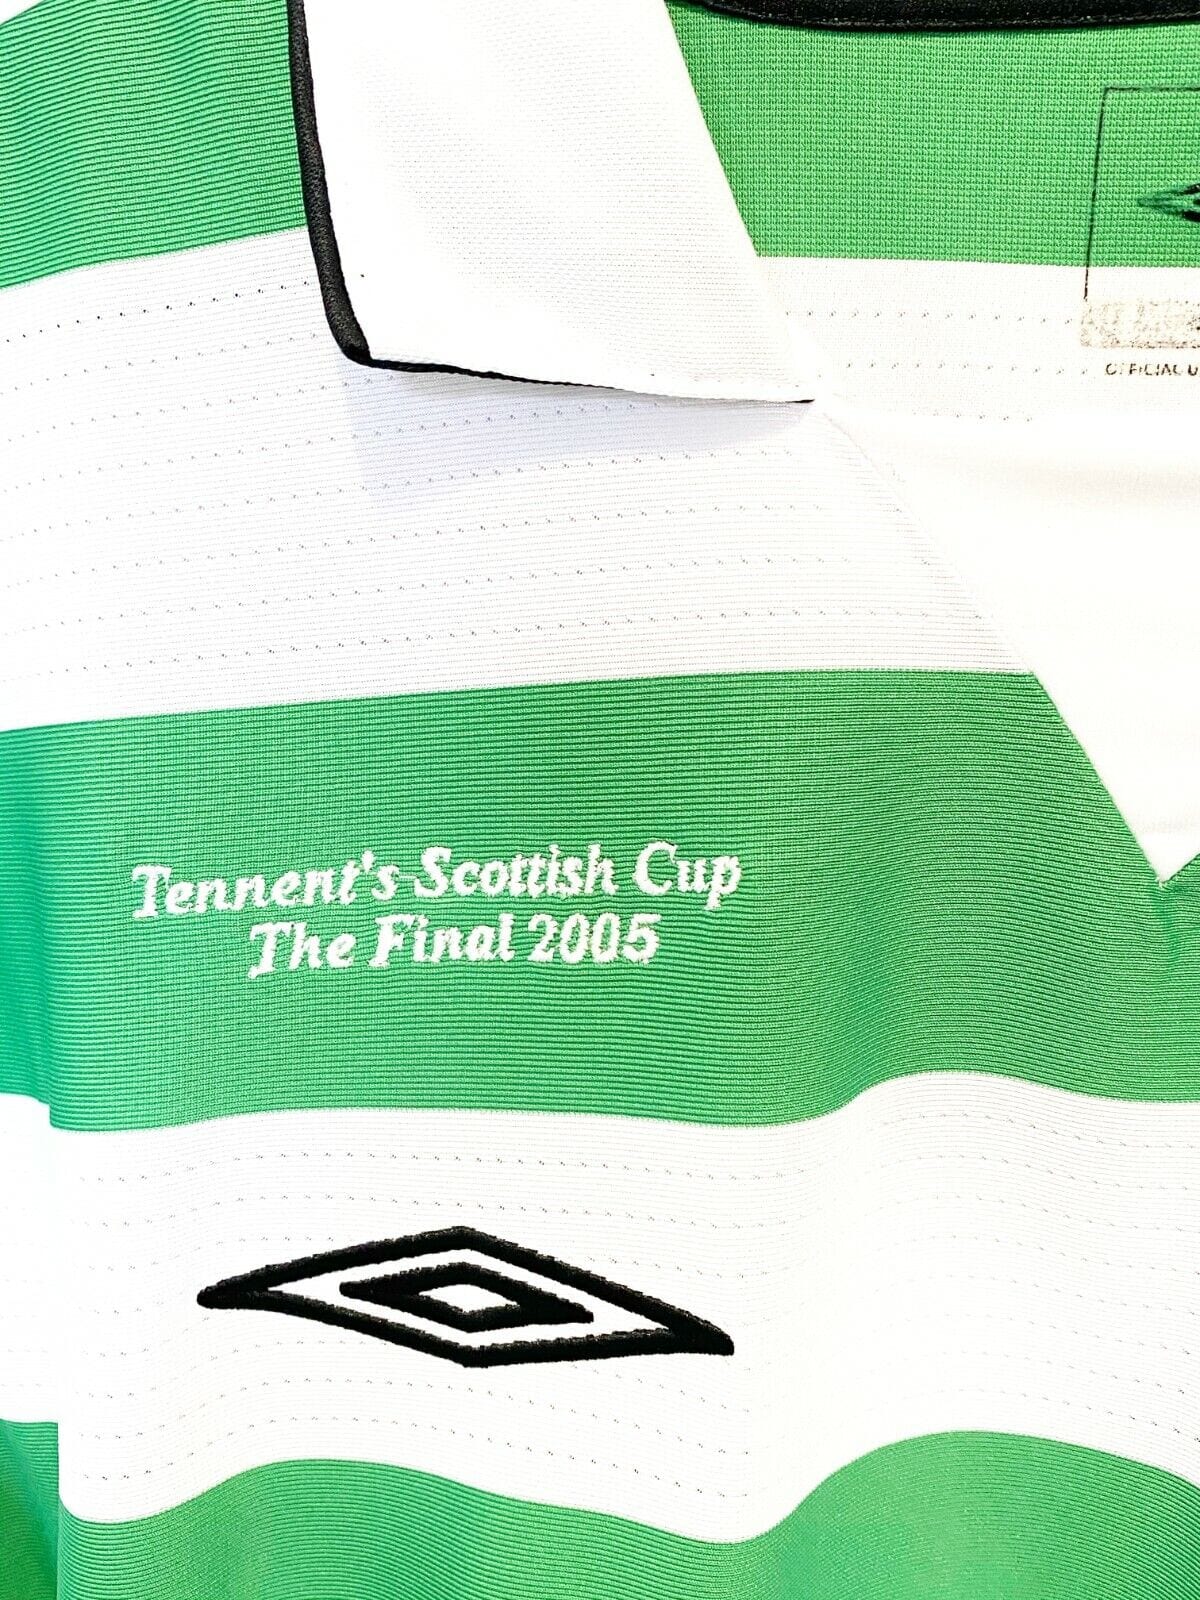 2004/05 PETROV #19 Celtic Vintage Umbro Scottish Cup Final Football Shirt (L)